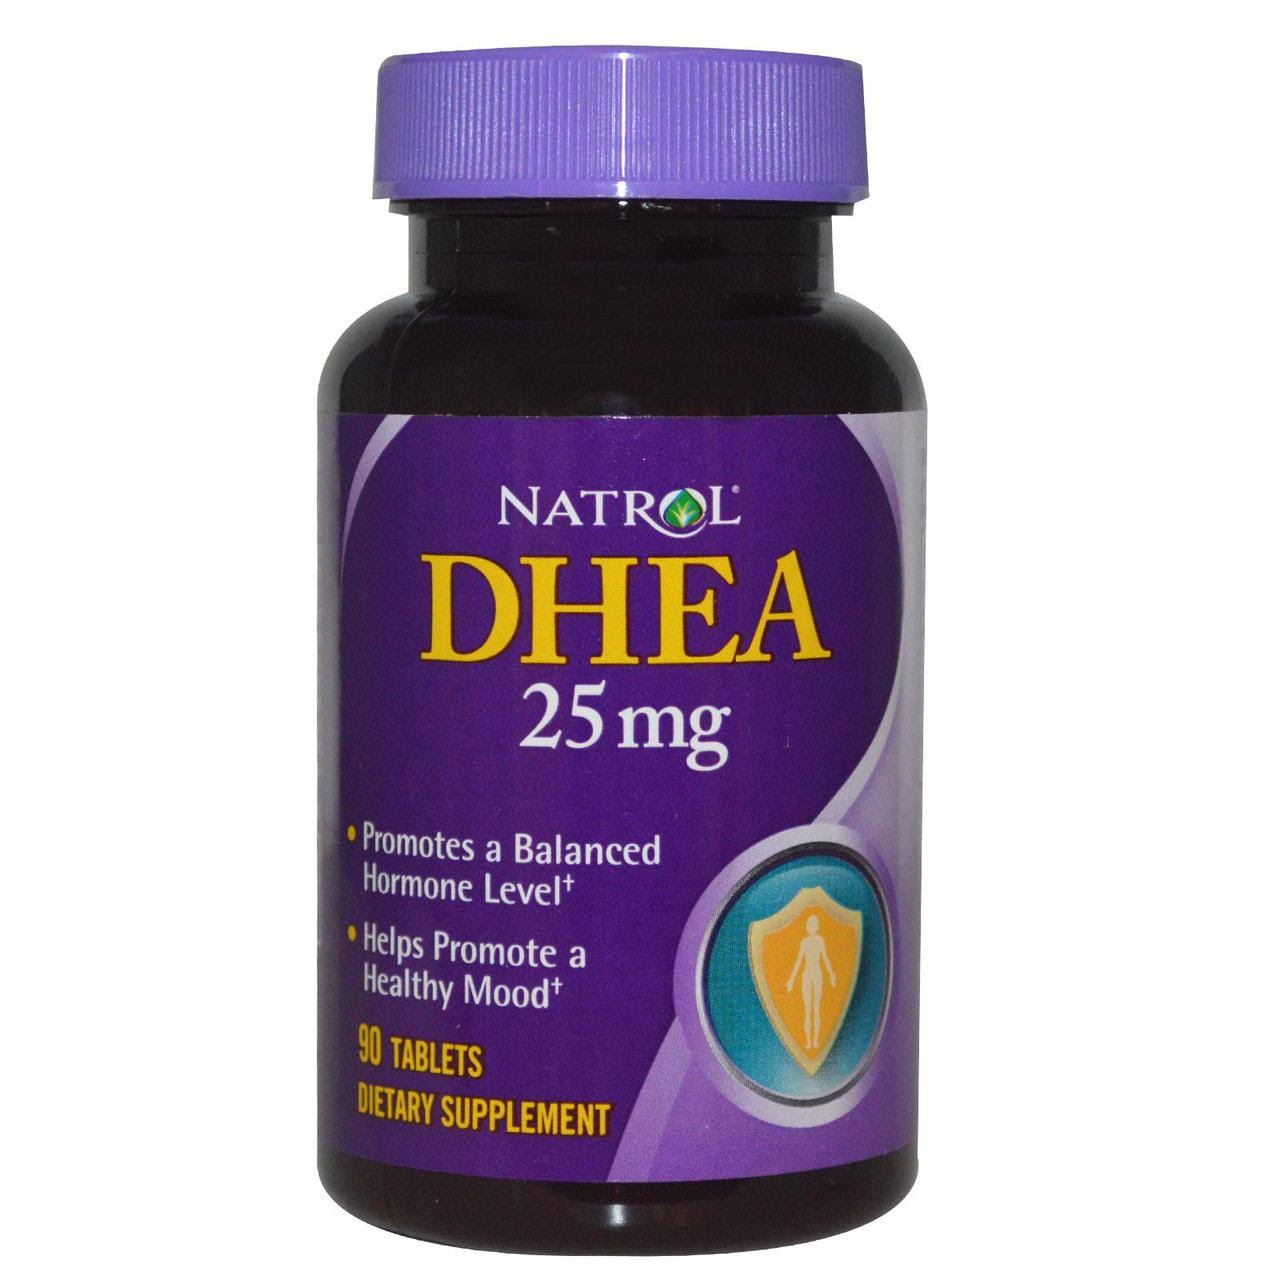 Natrol DHEA Supplement - Orange, 25mg, 30ct